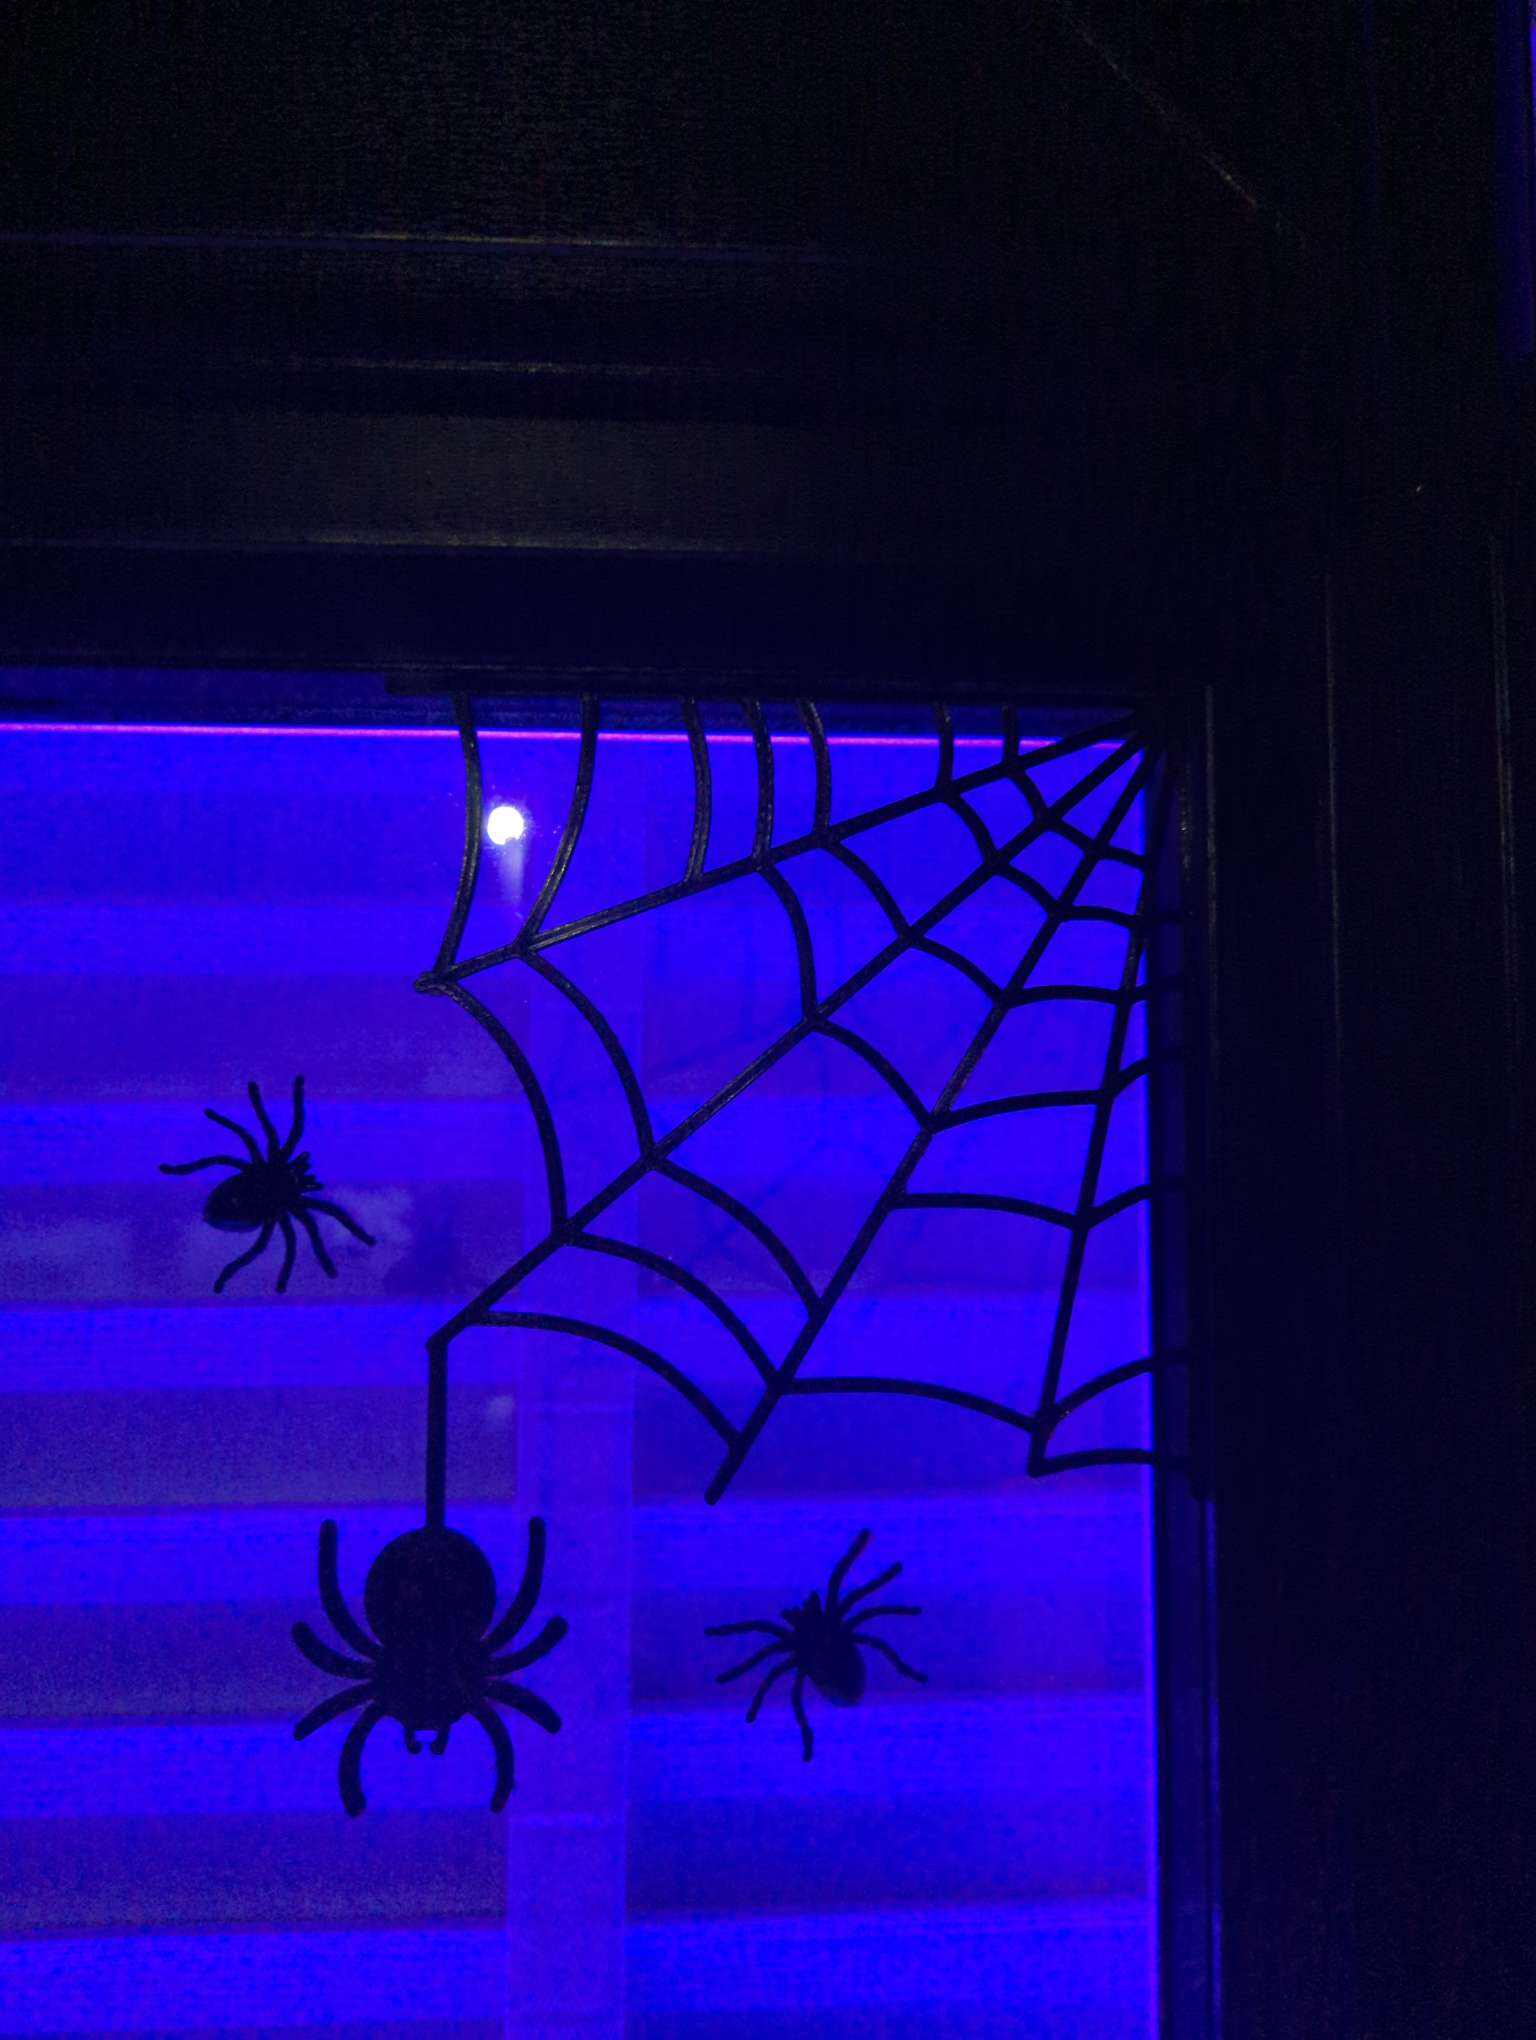 Corner web with spider